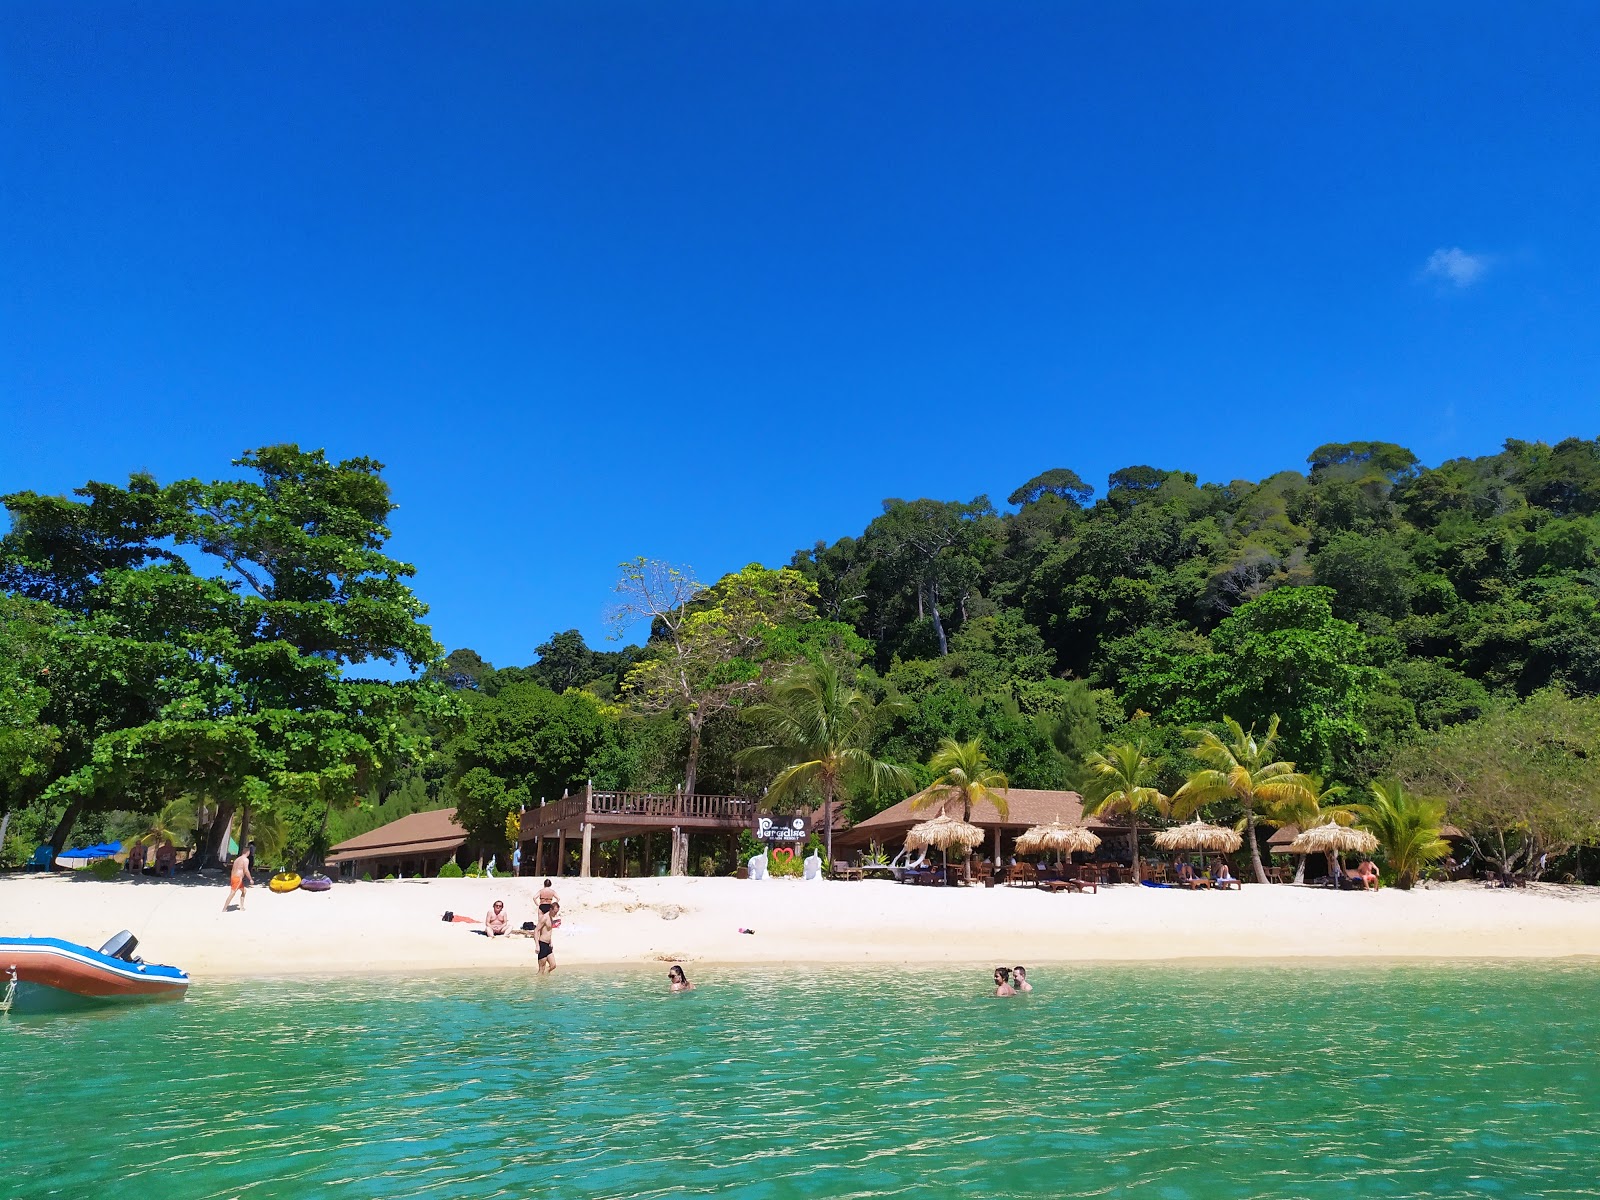 Foto af Koh Ngai Paradise Beach delvist hotelområde